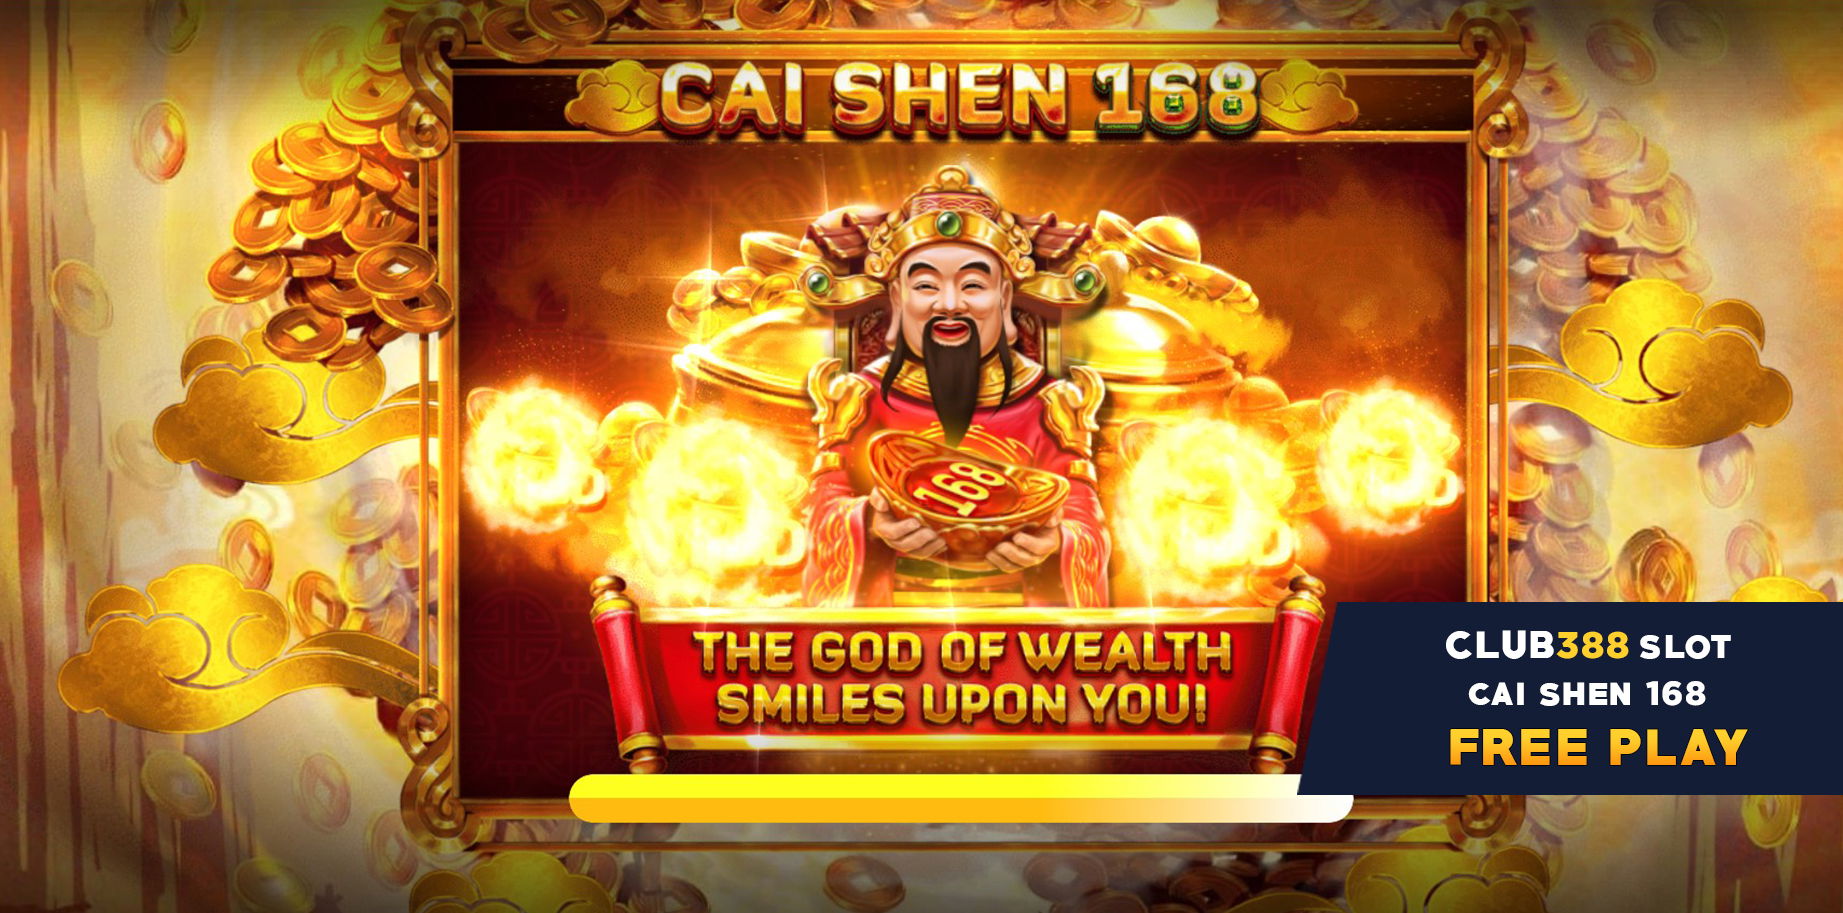 Cai Shen 168 Slot Game Red Tiger - Club388 